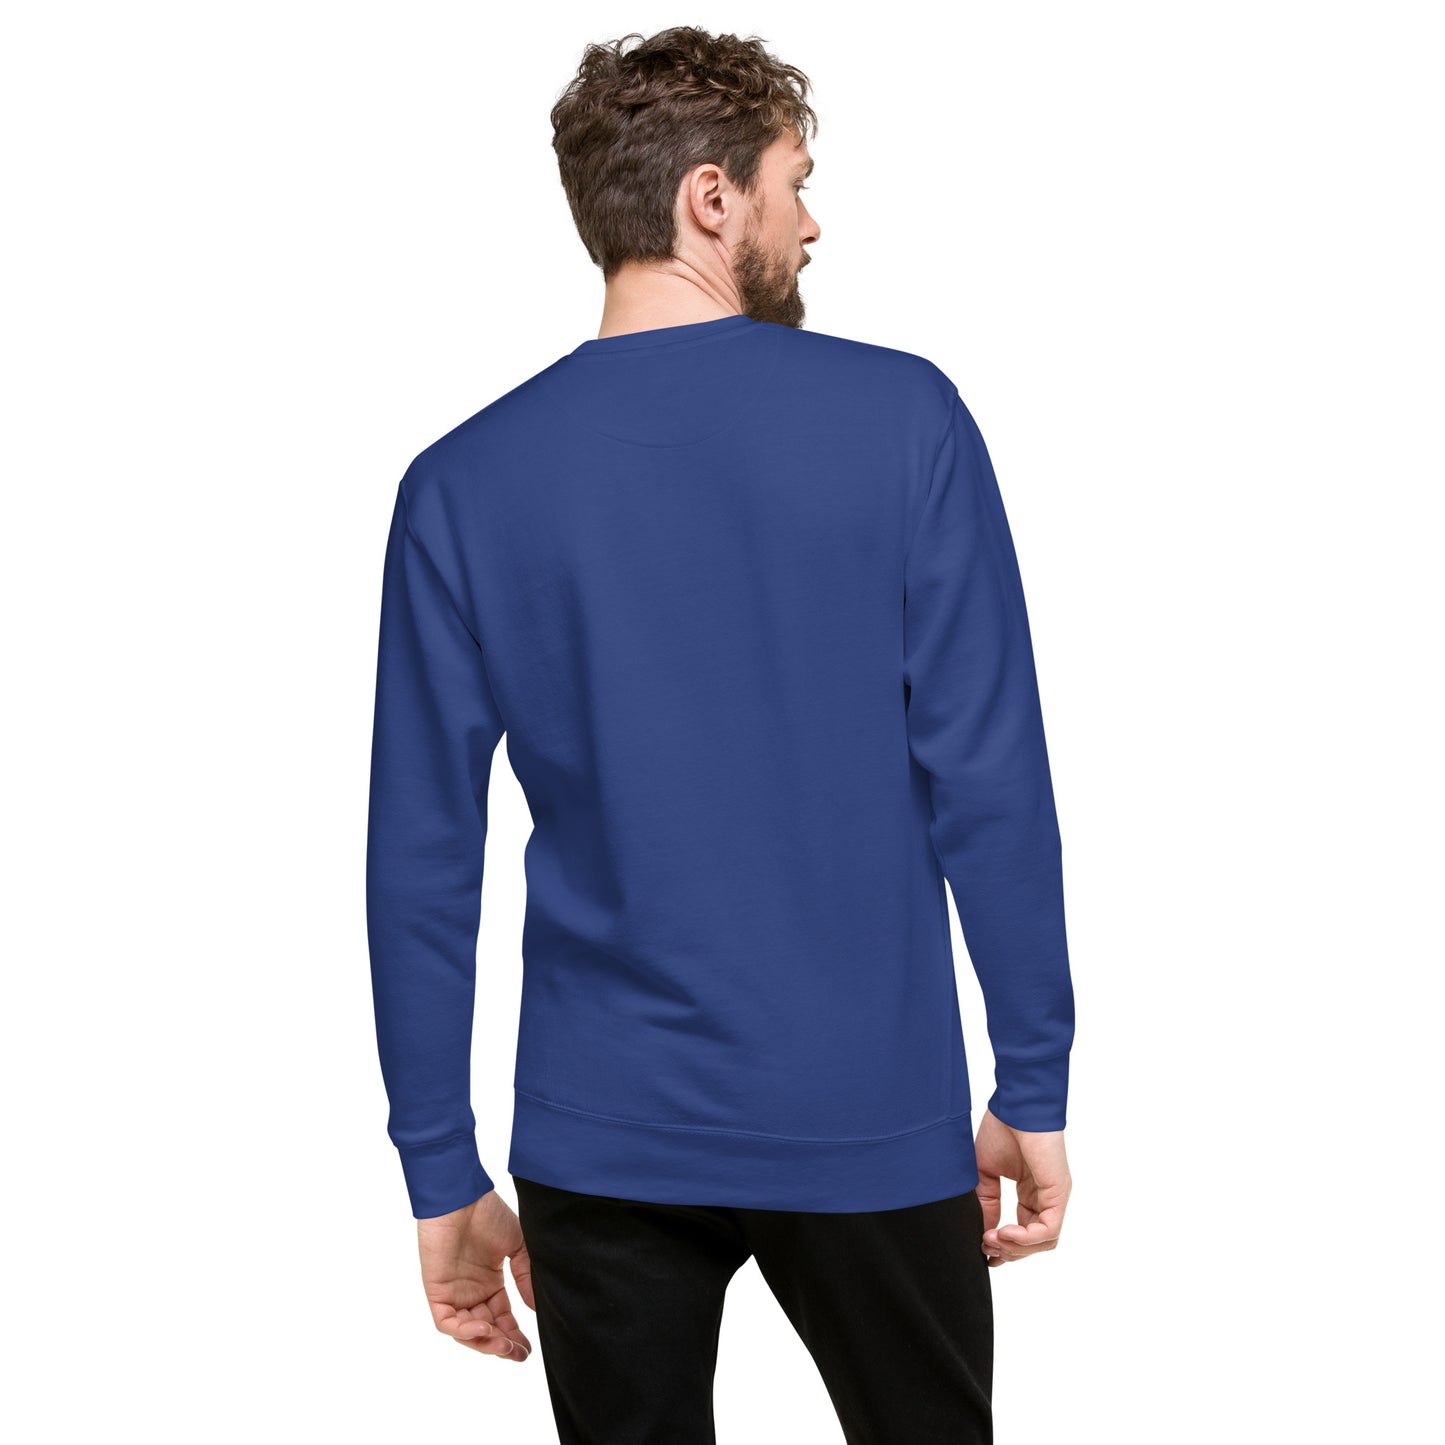 ISFP MBTI Unisex Premium Sweatshirt